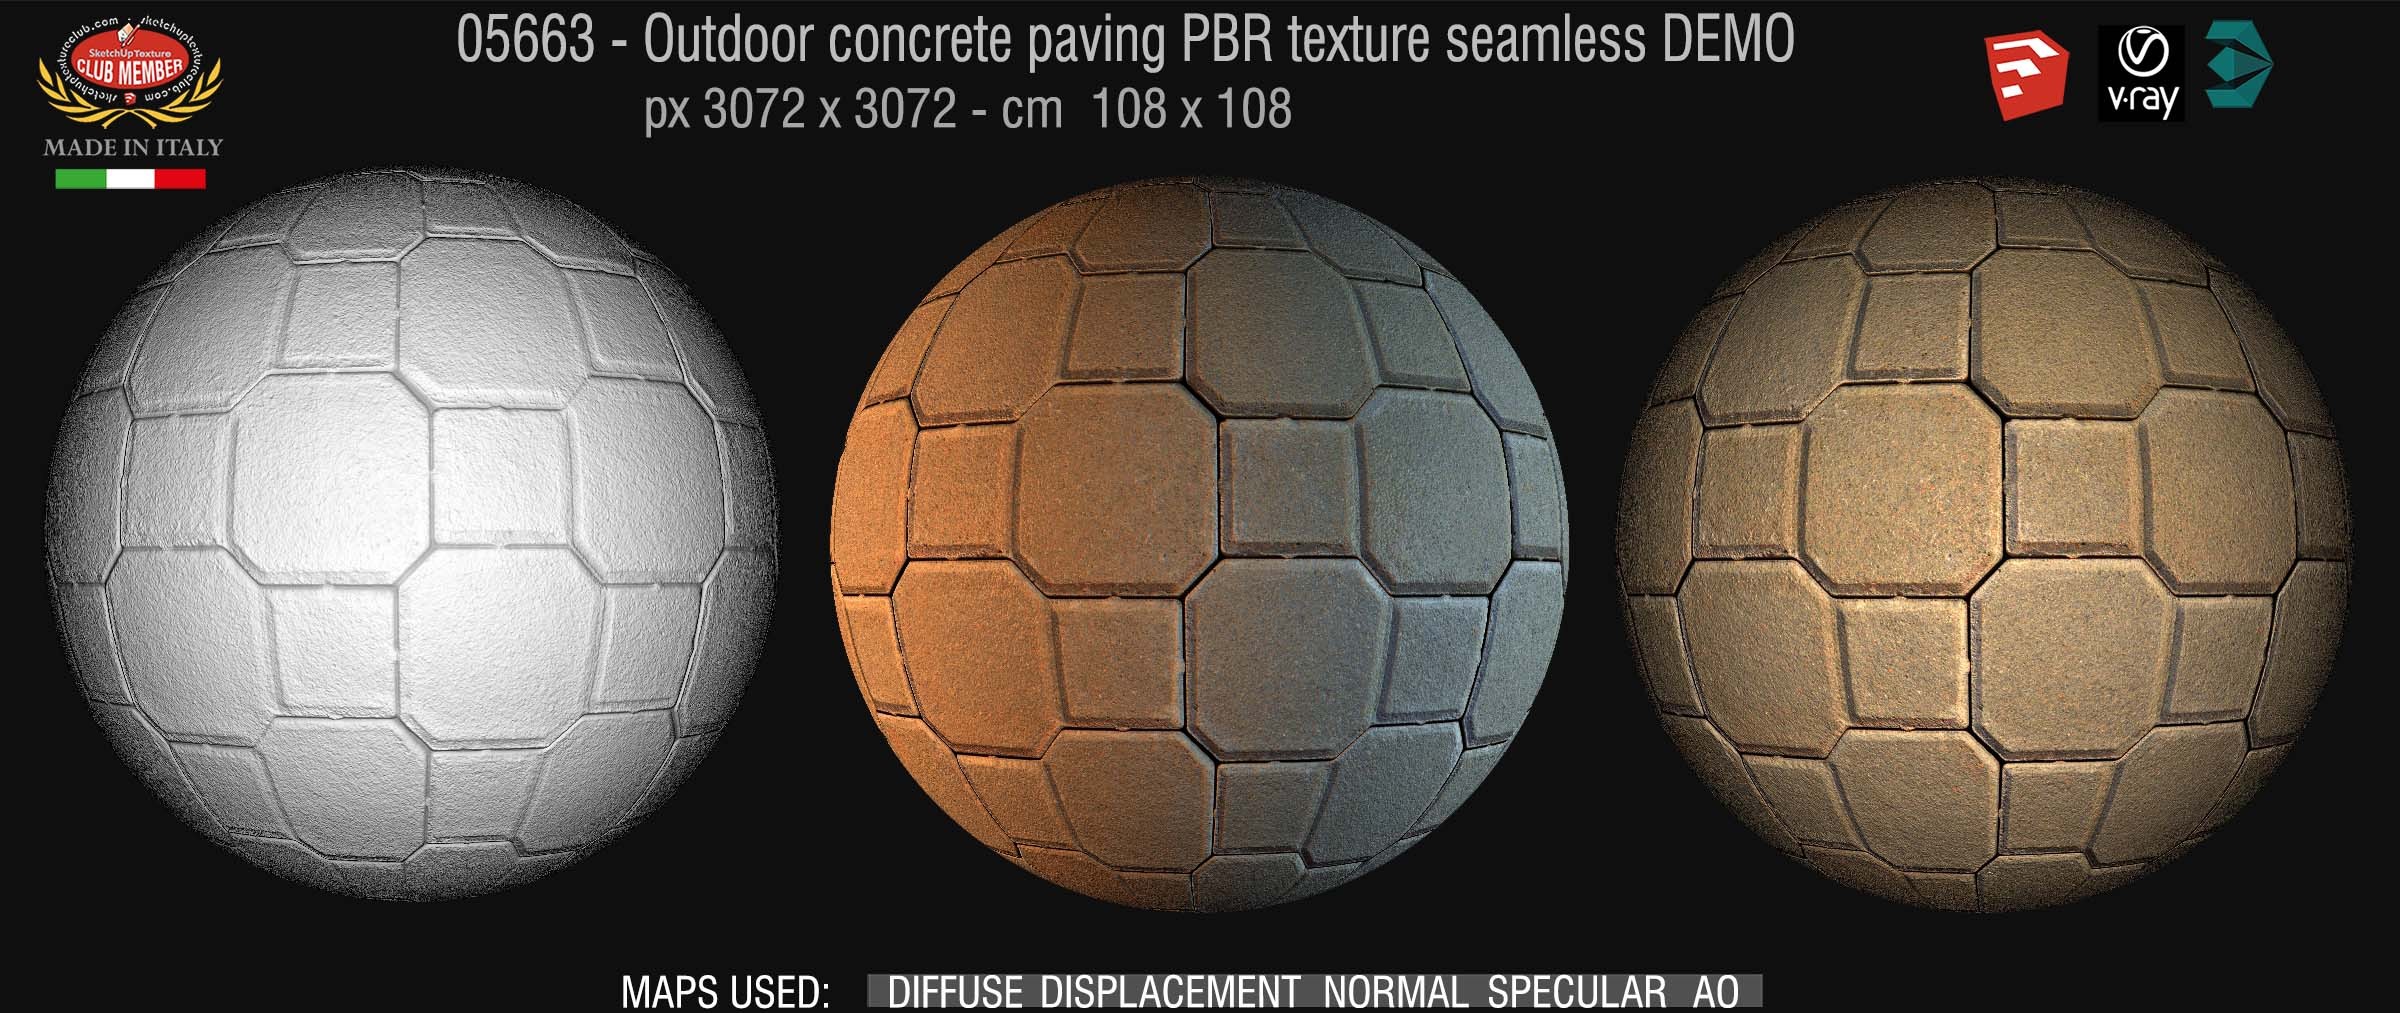 05663 Ourdoor concrete paving PBR texture seamless DEMO